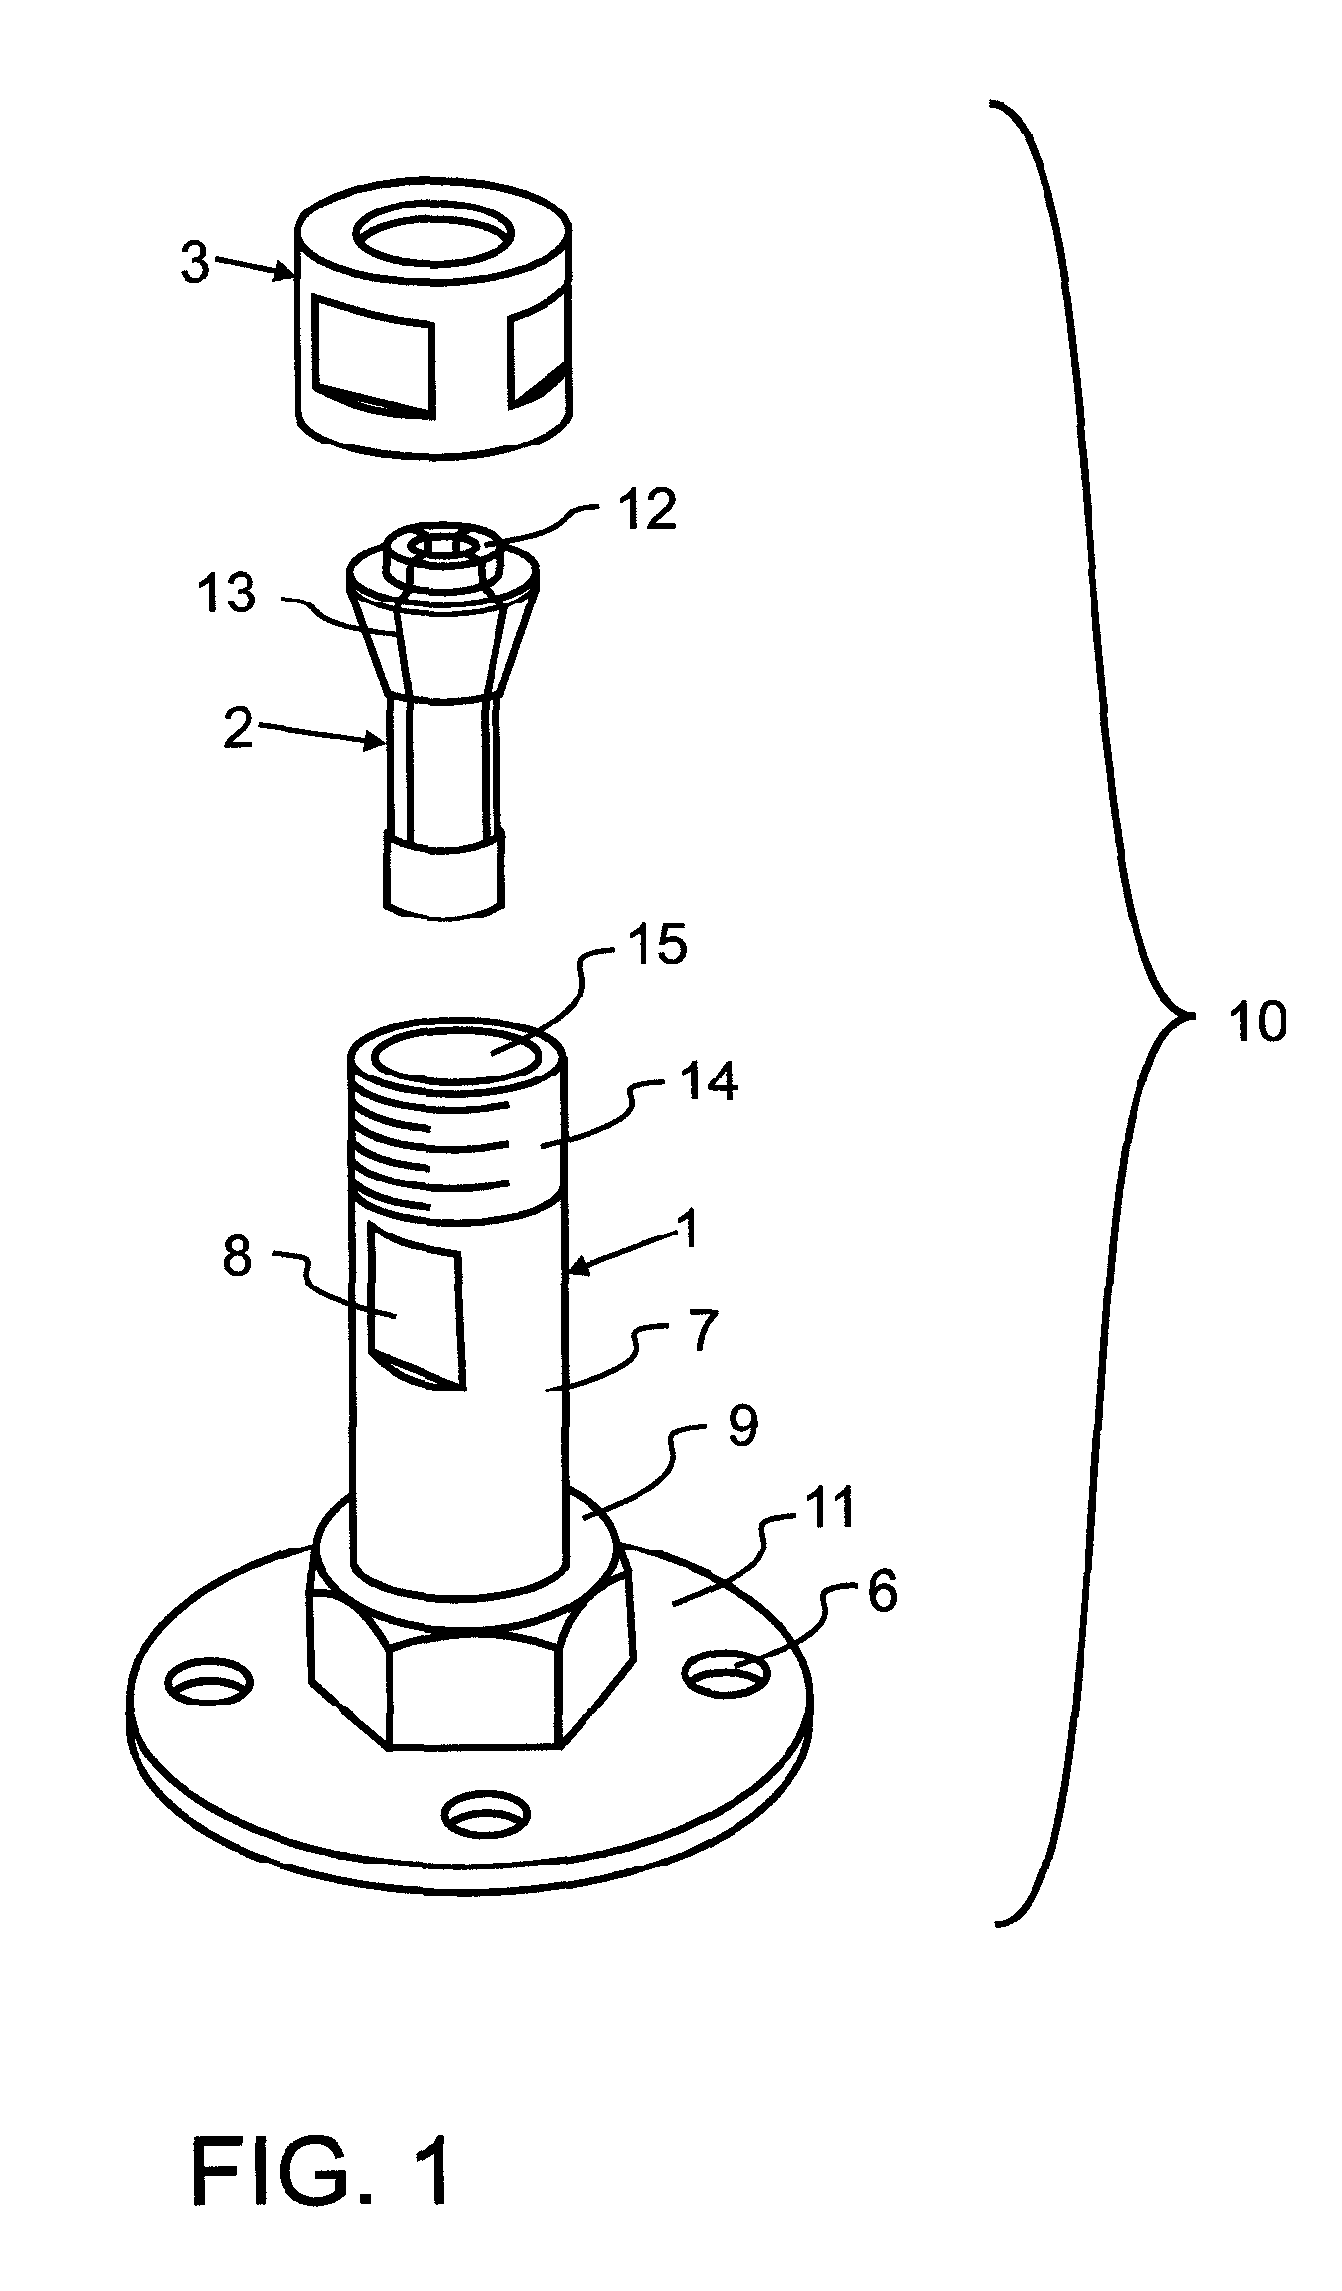 Angle grinder and angle grinder spindle-collet adaptor